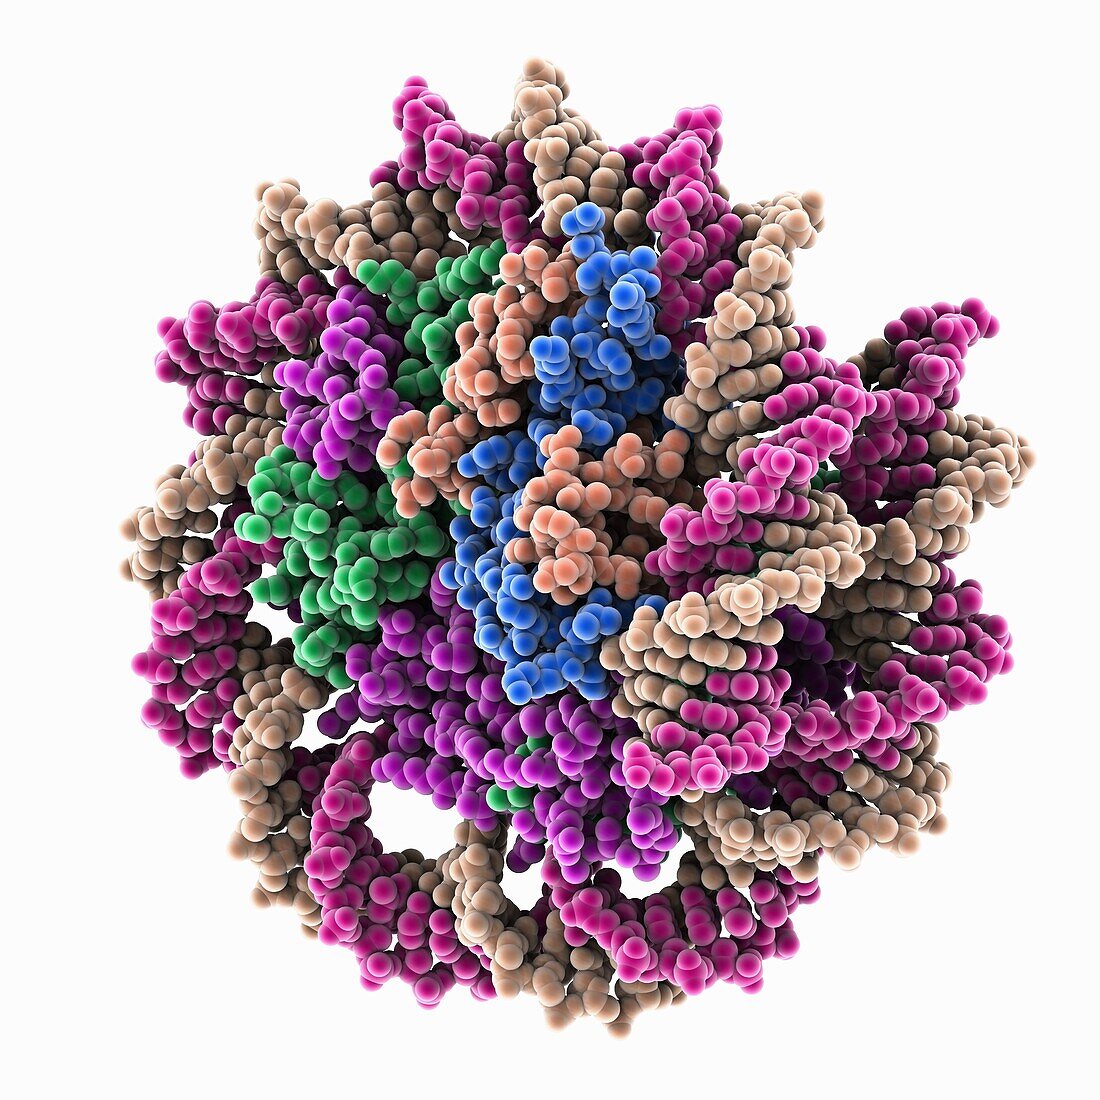 Marseillevirus nucleosome, molecular model